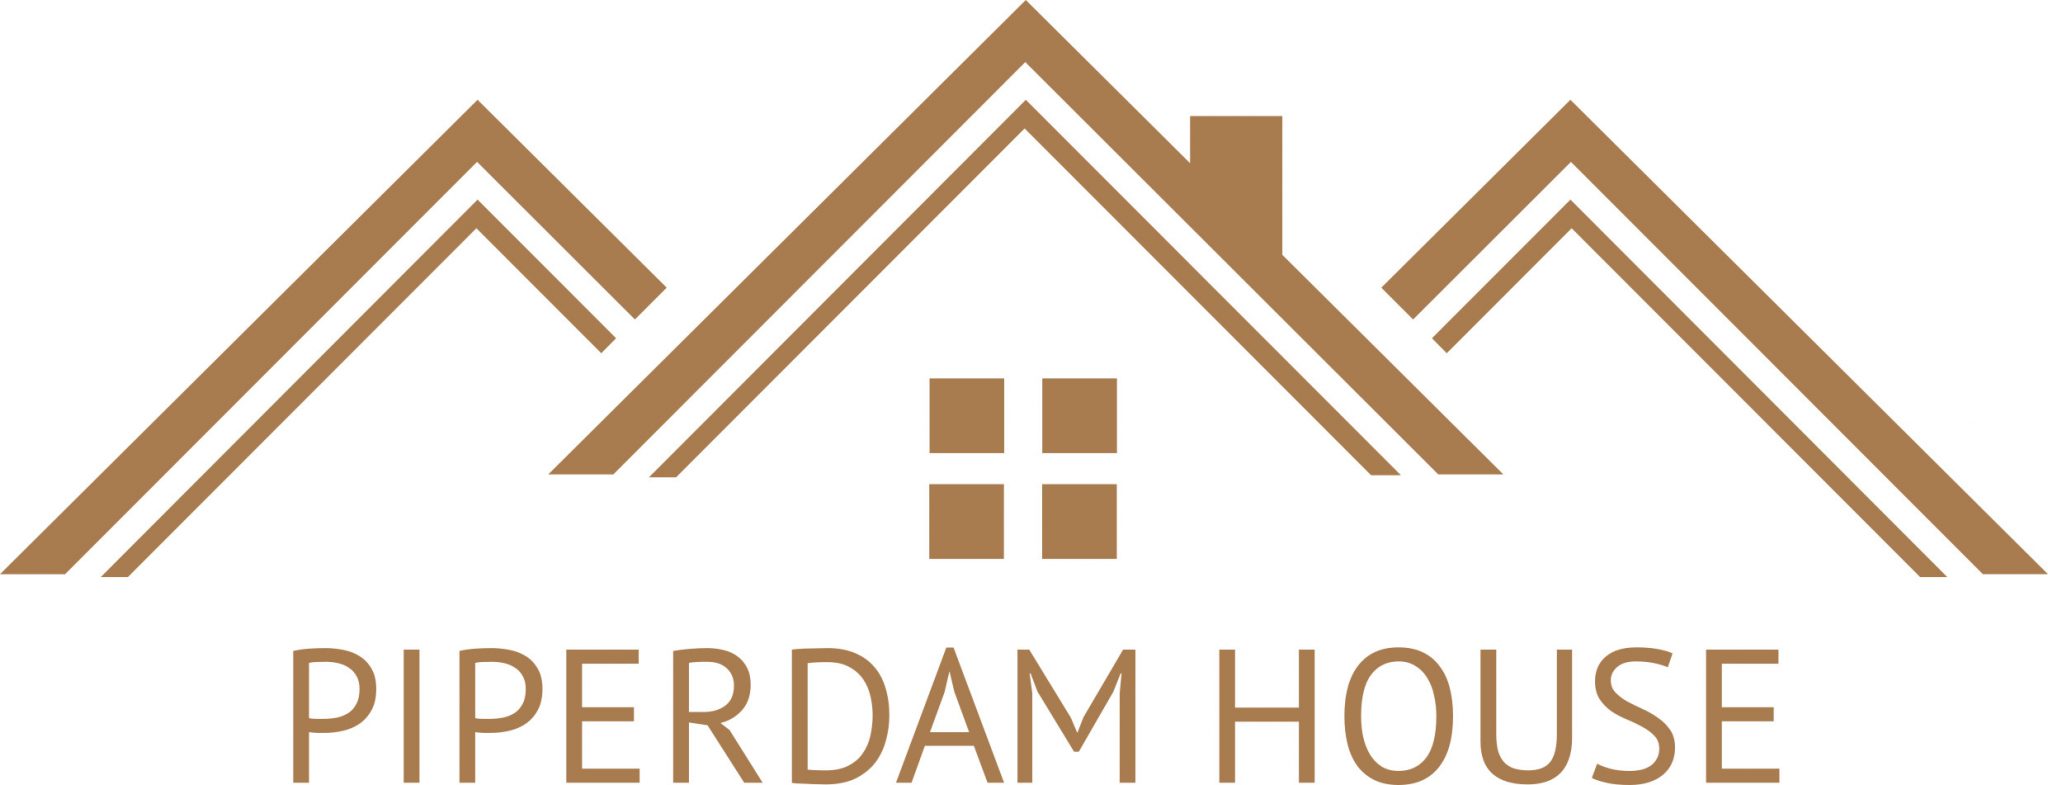 Piperdam House Logo